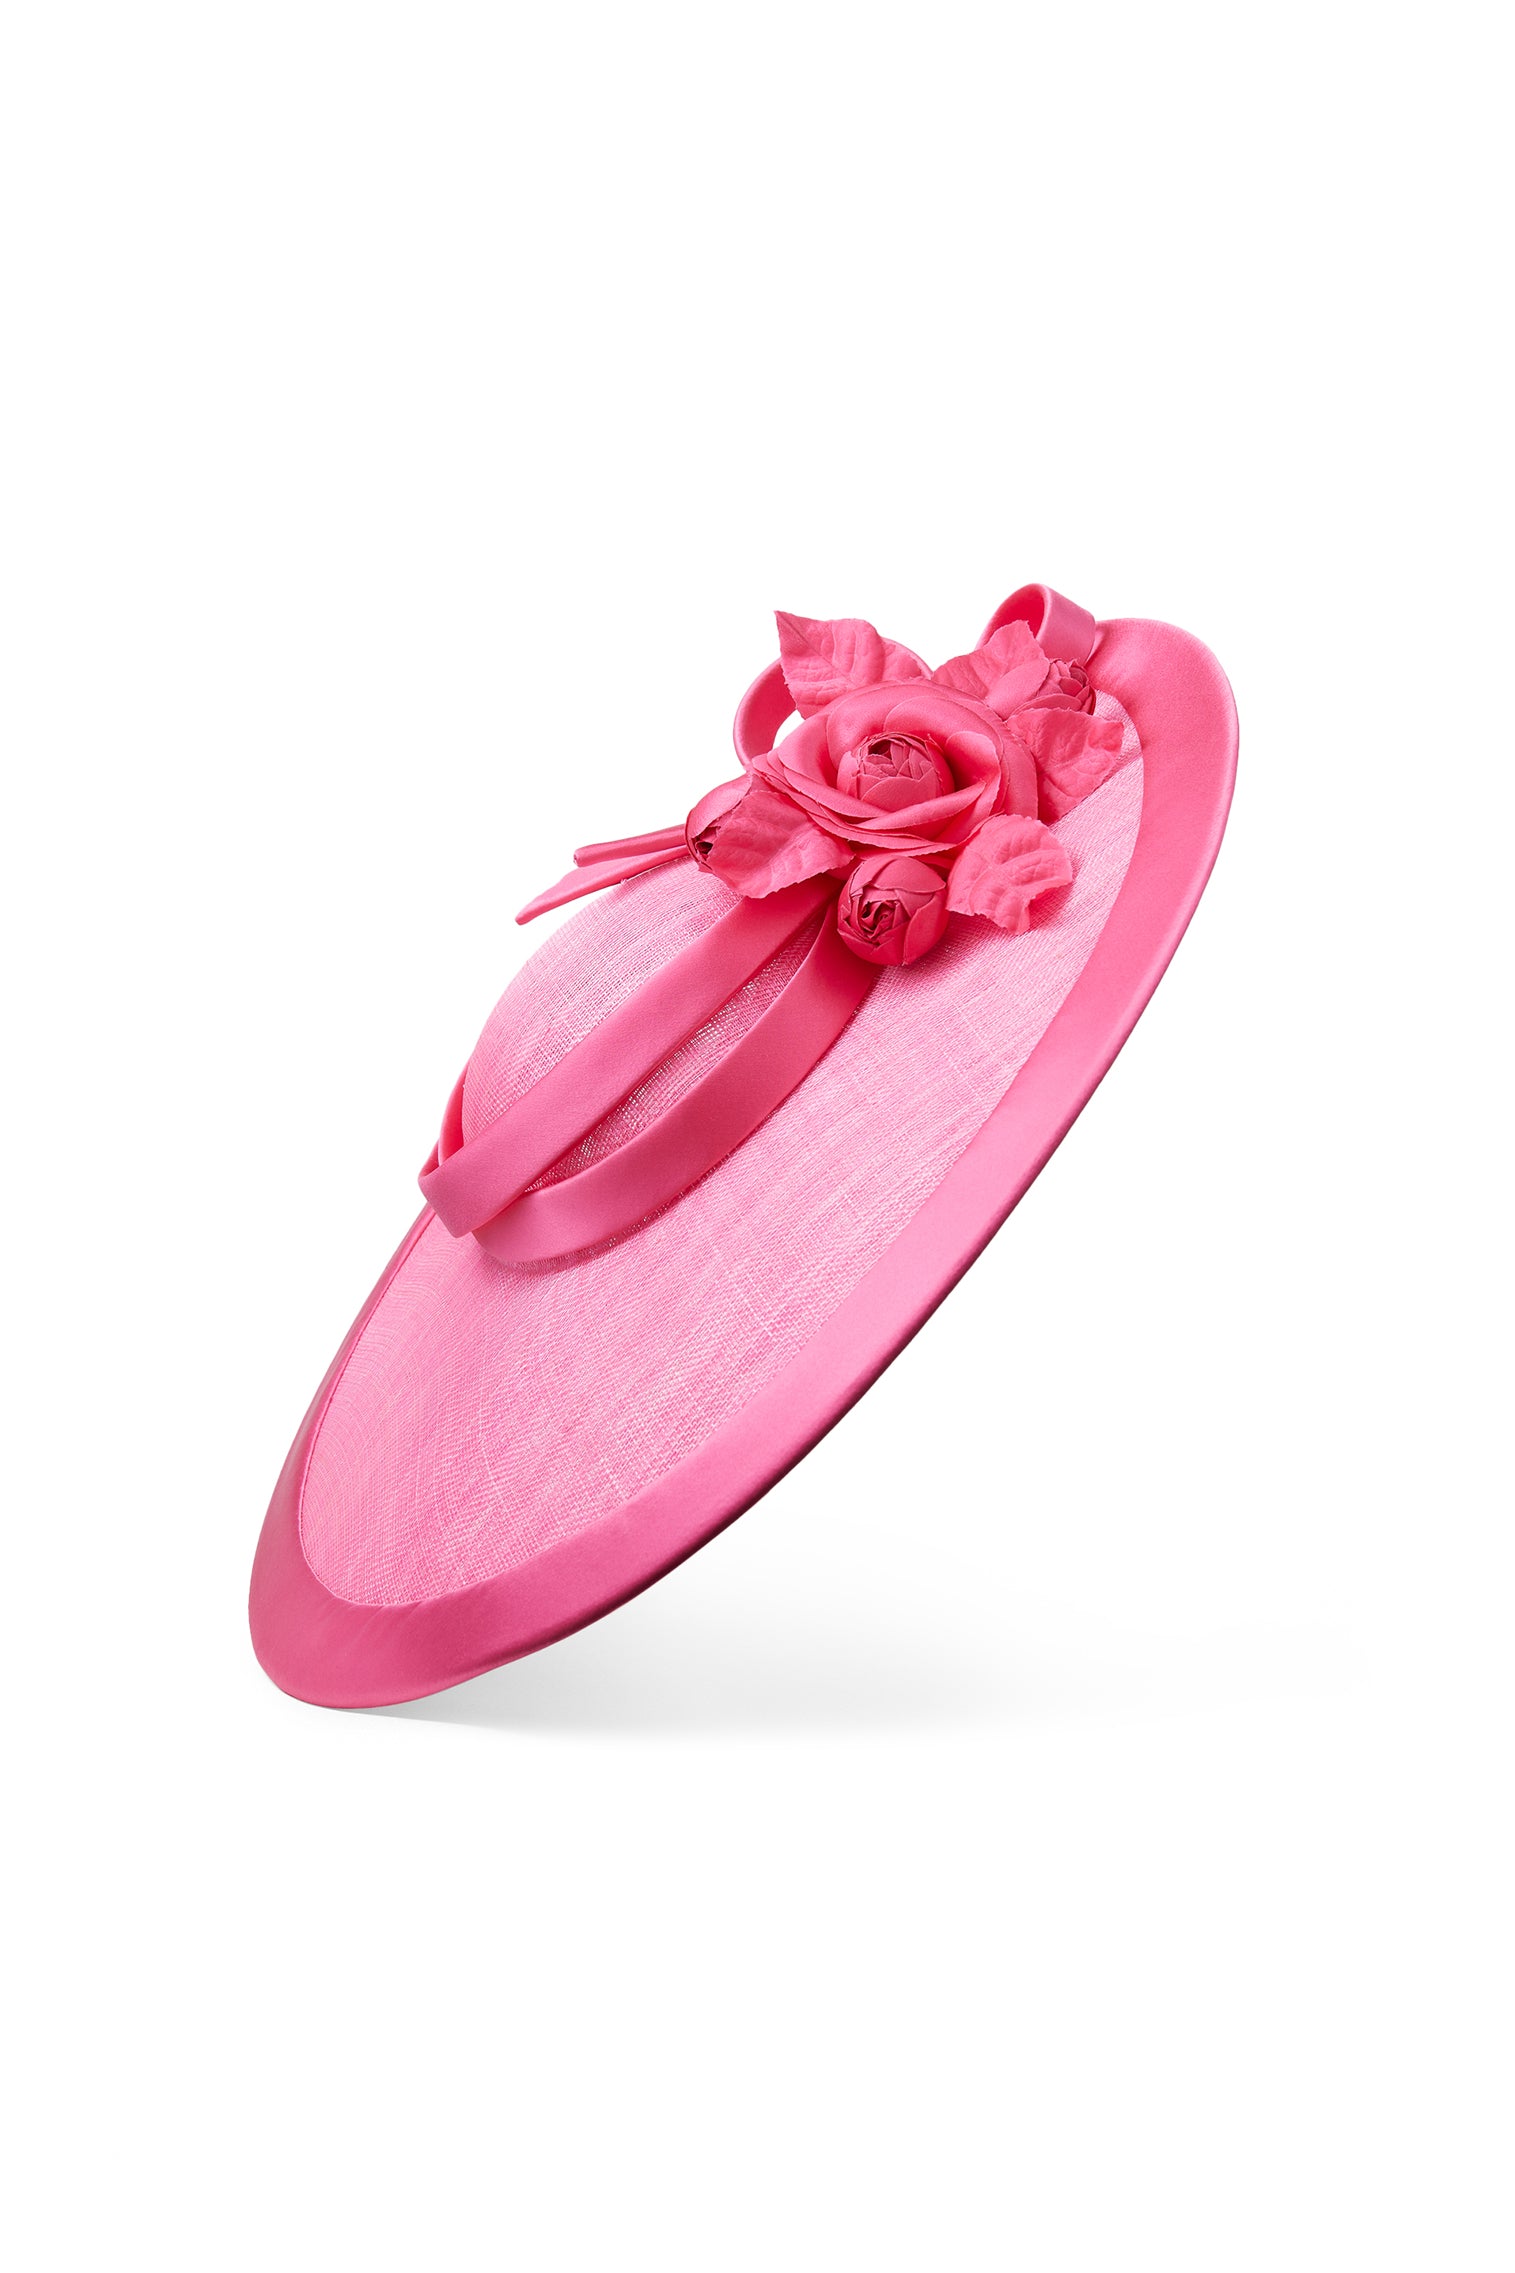 Jasmine Bright Pink Slice Hat - Products - Lock & Co. Hatters London UK